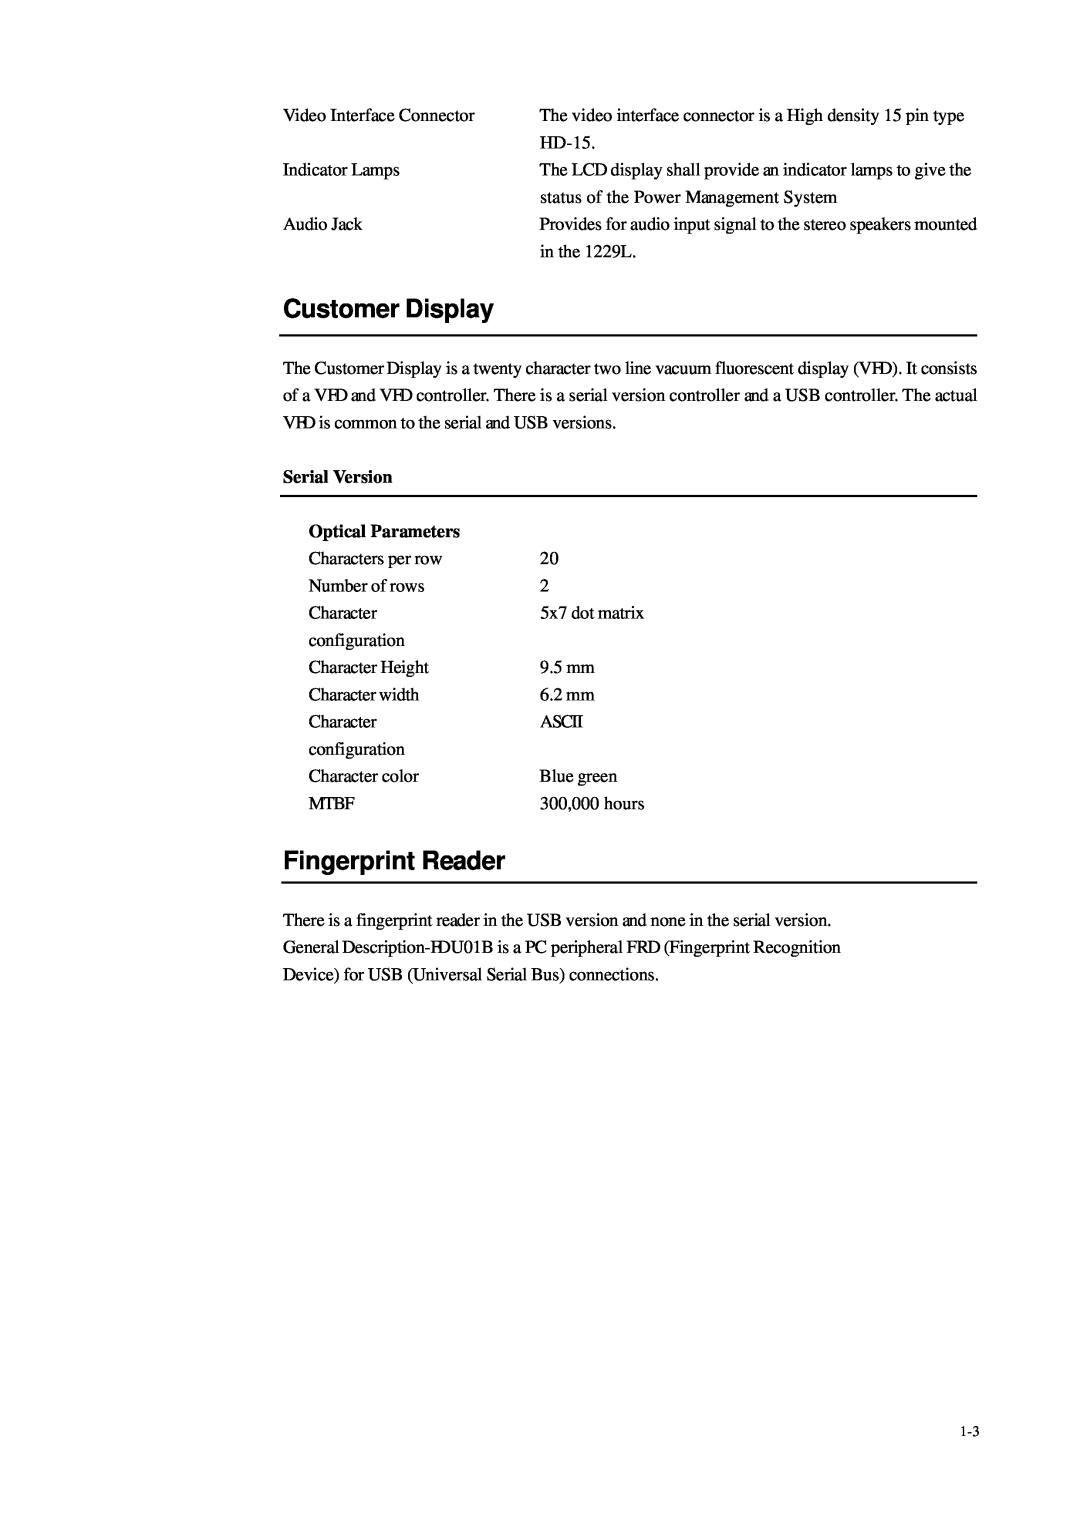 Tyco Electronics 1229L manual Customer Display, Fingerprint Reader, Serial Version, Optical Parameters 